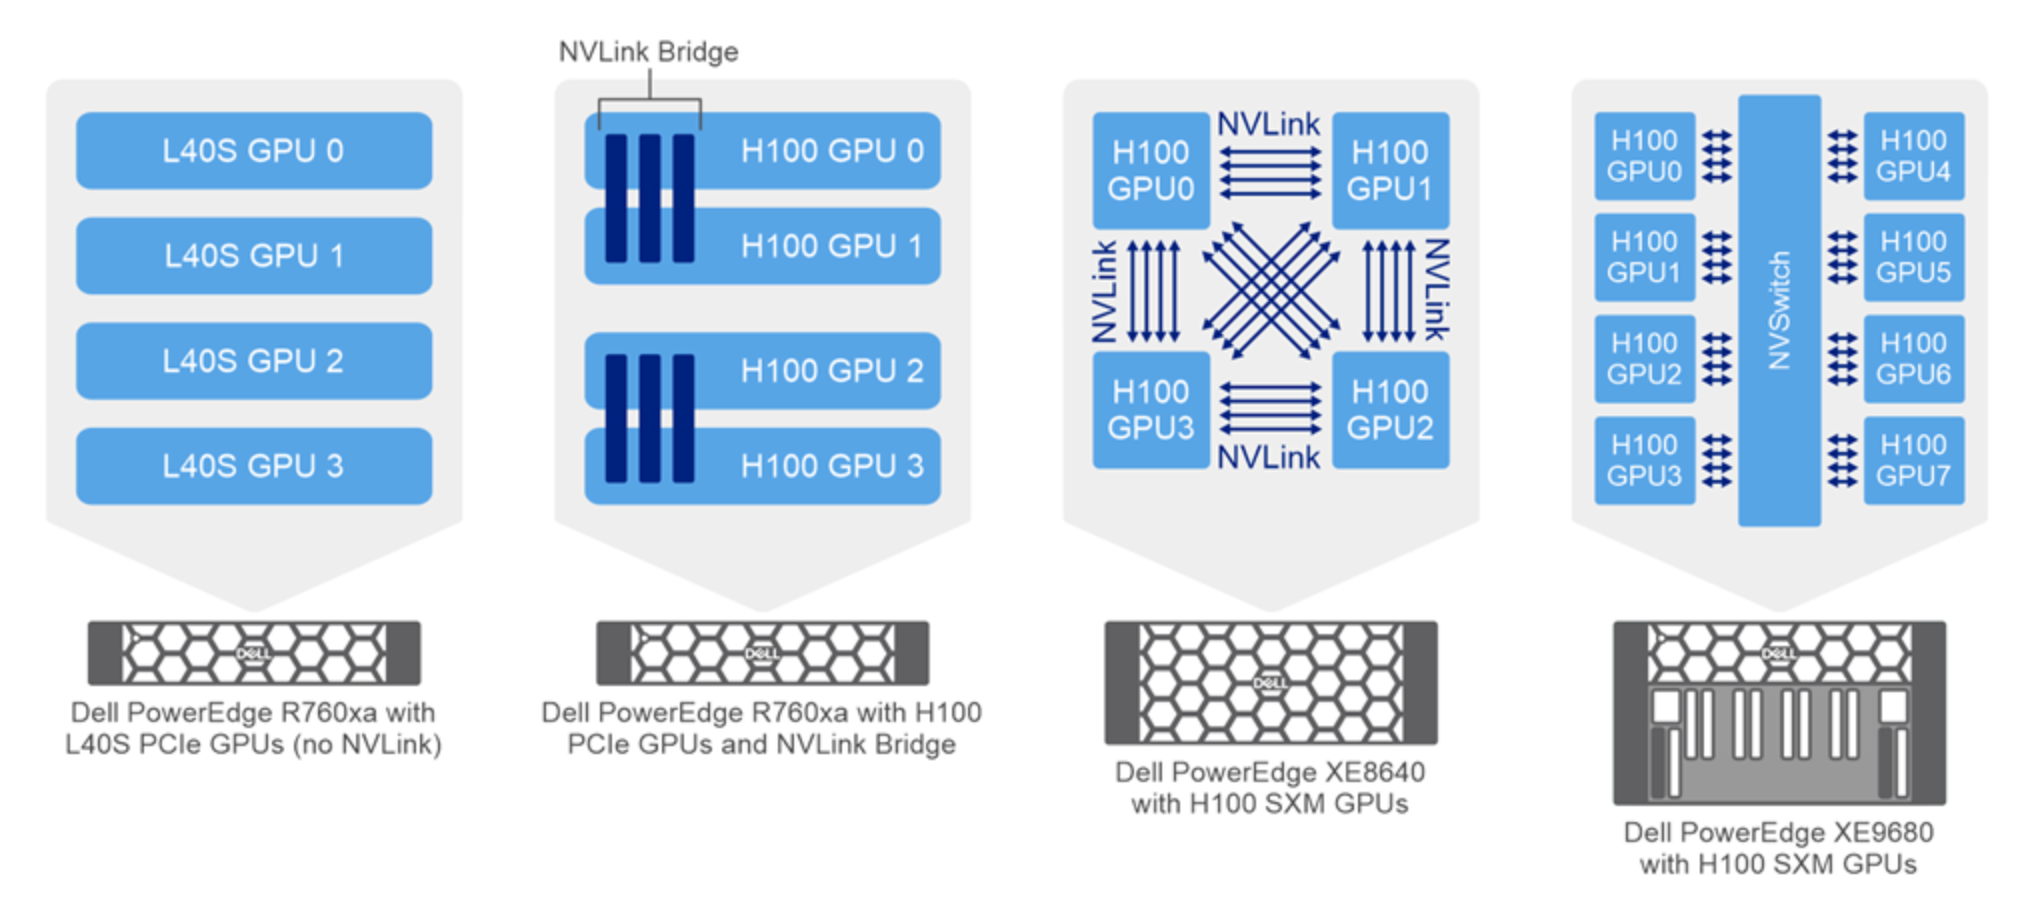 Figure of the NVIDIA GPU connectivity in PowerEdge servers